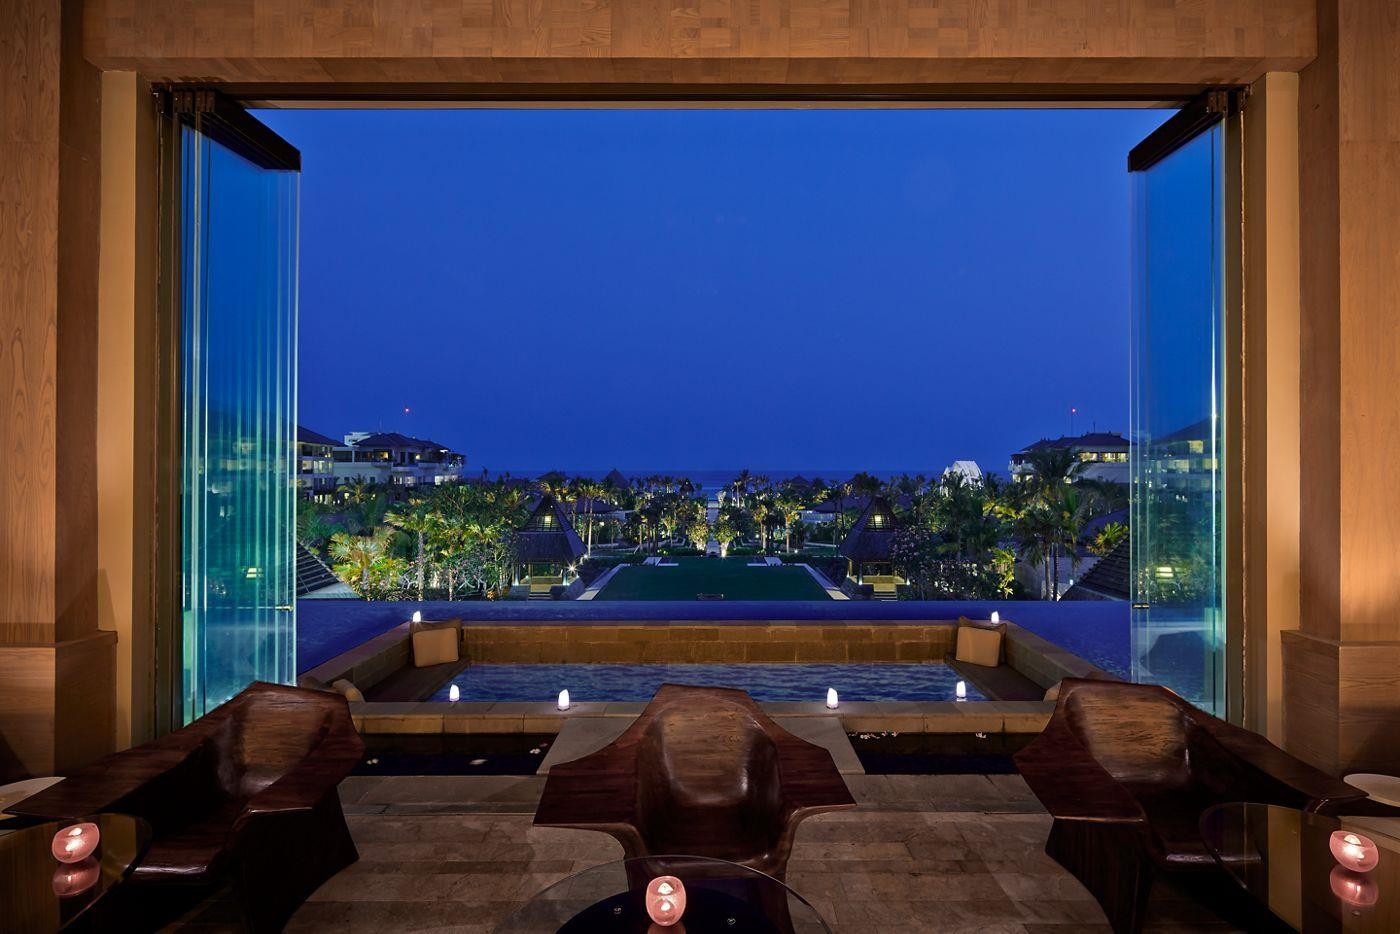 The Ritz Carlton Bali 5*